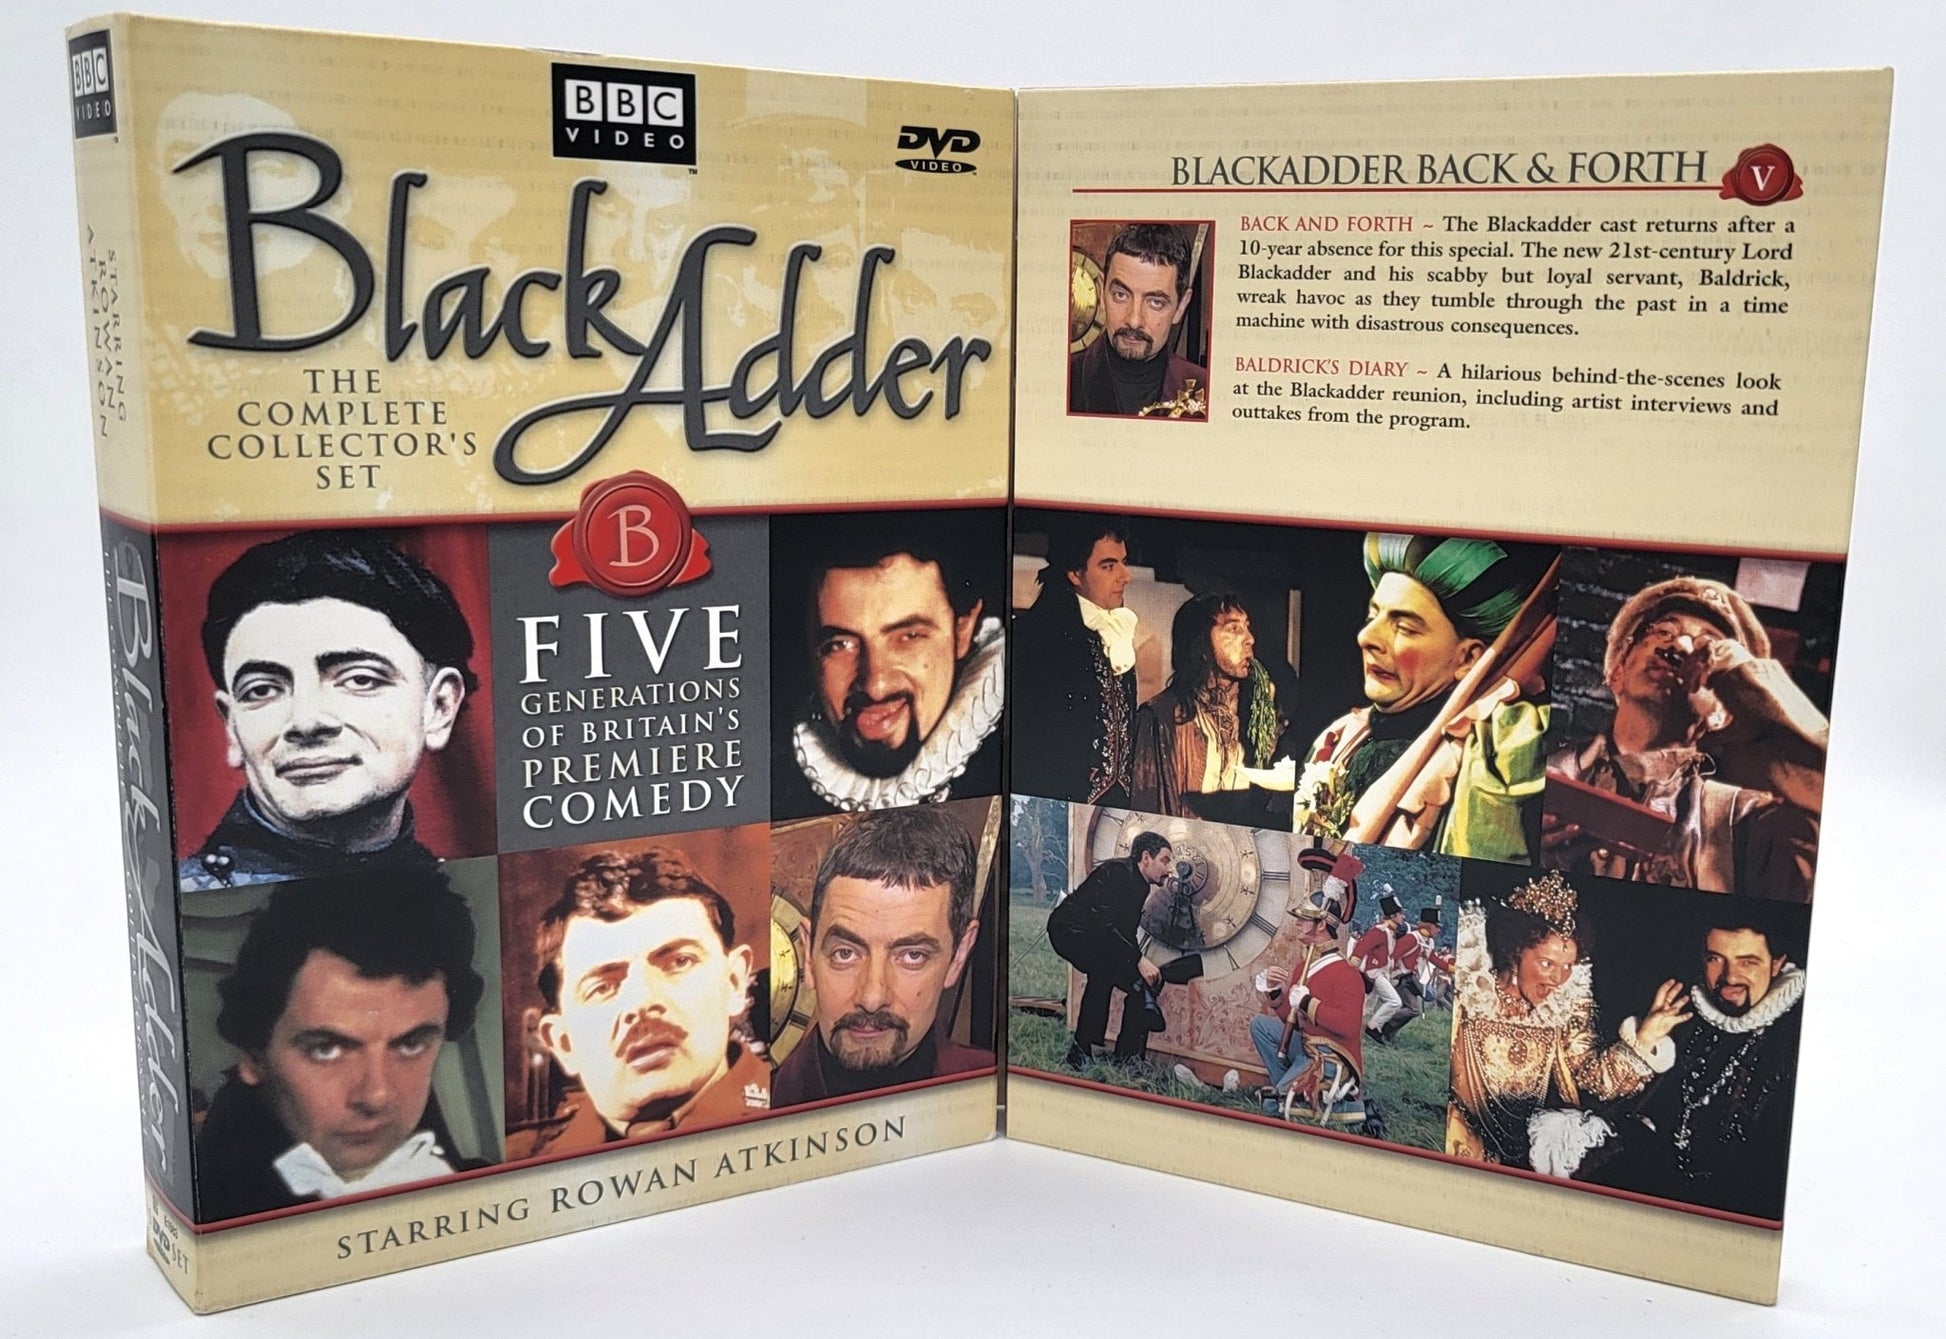 BBC Warner - Black Adder | DVD | The Complete Collector's Set - DVD - Steady Bunny Shop